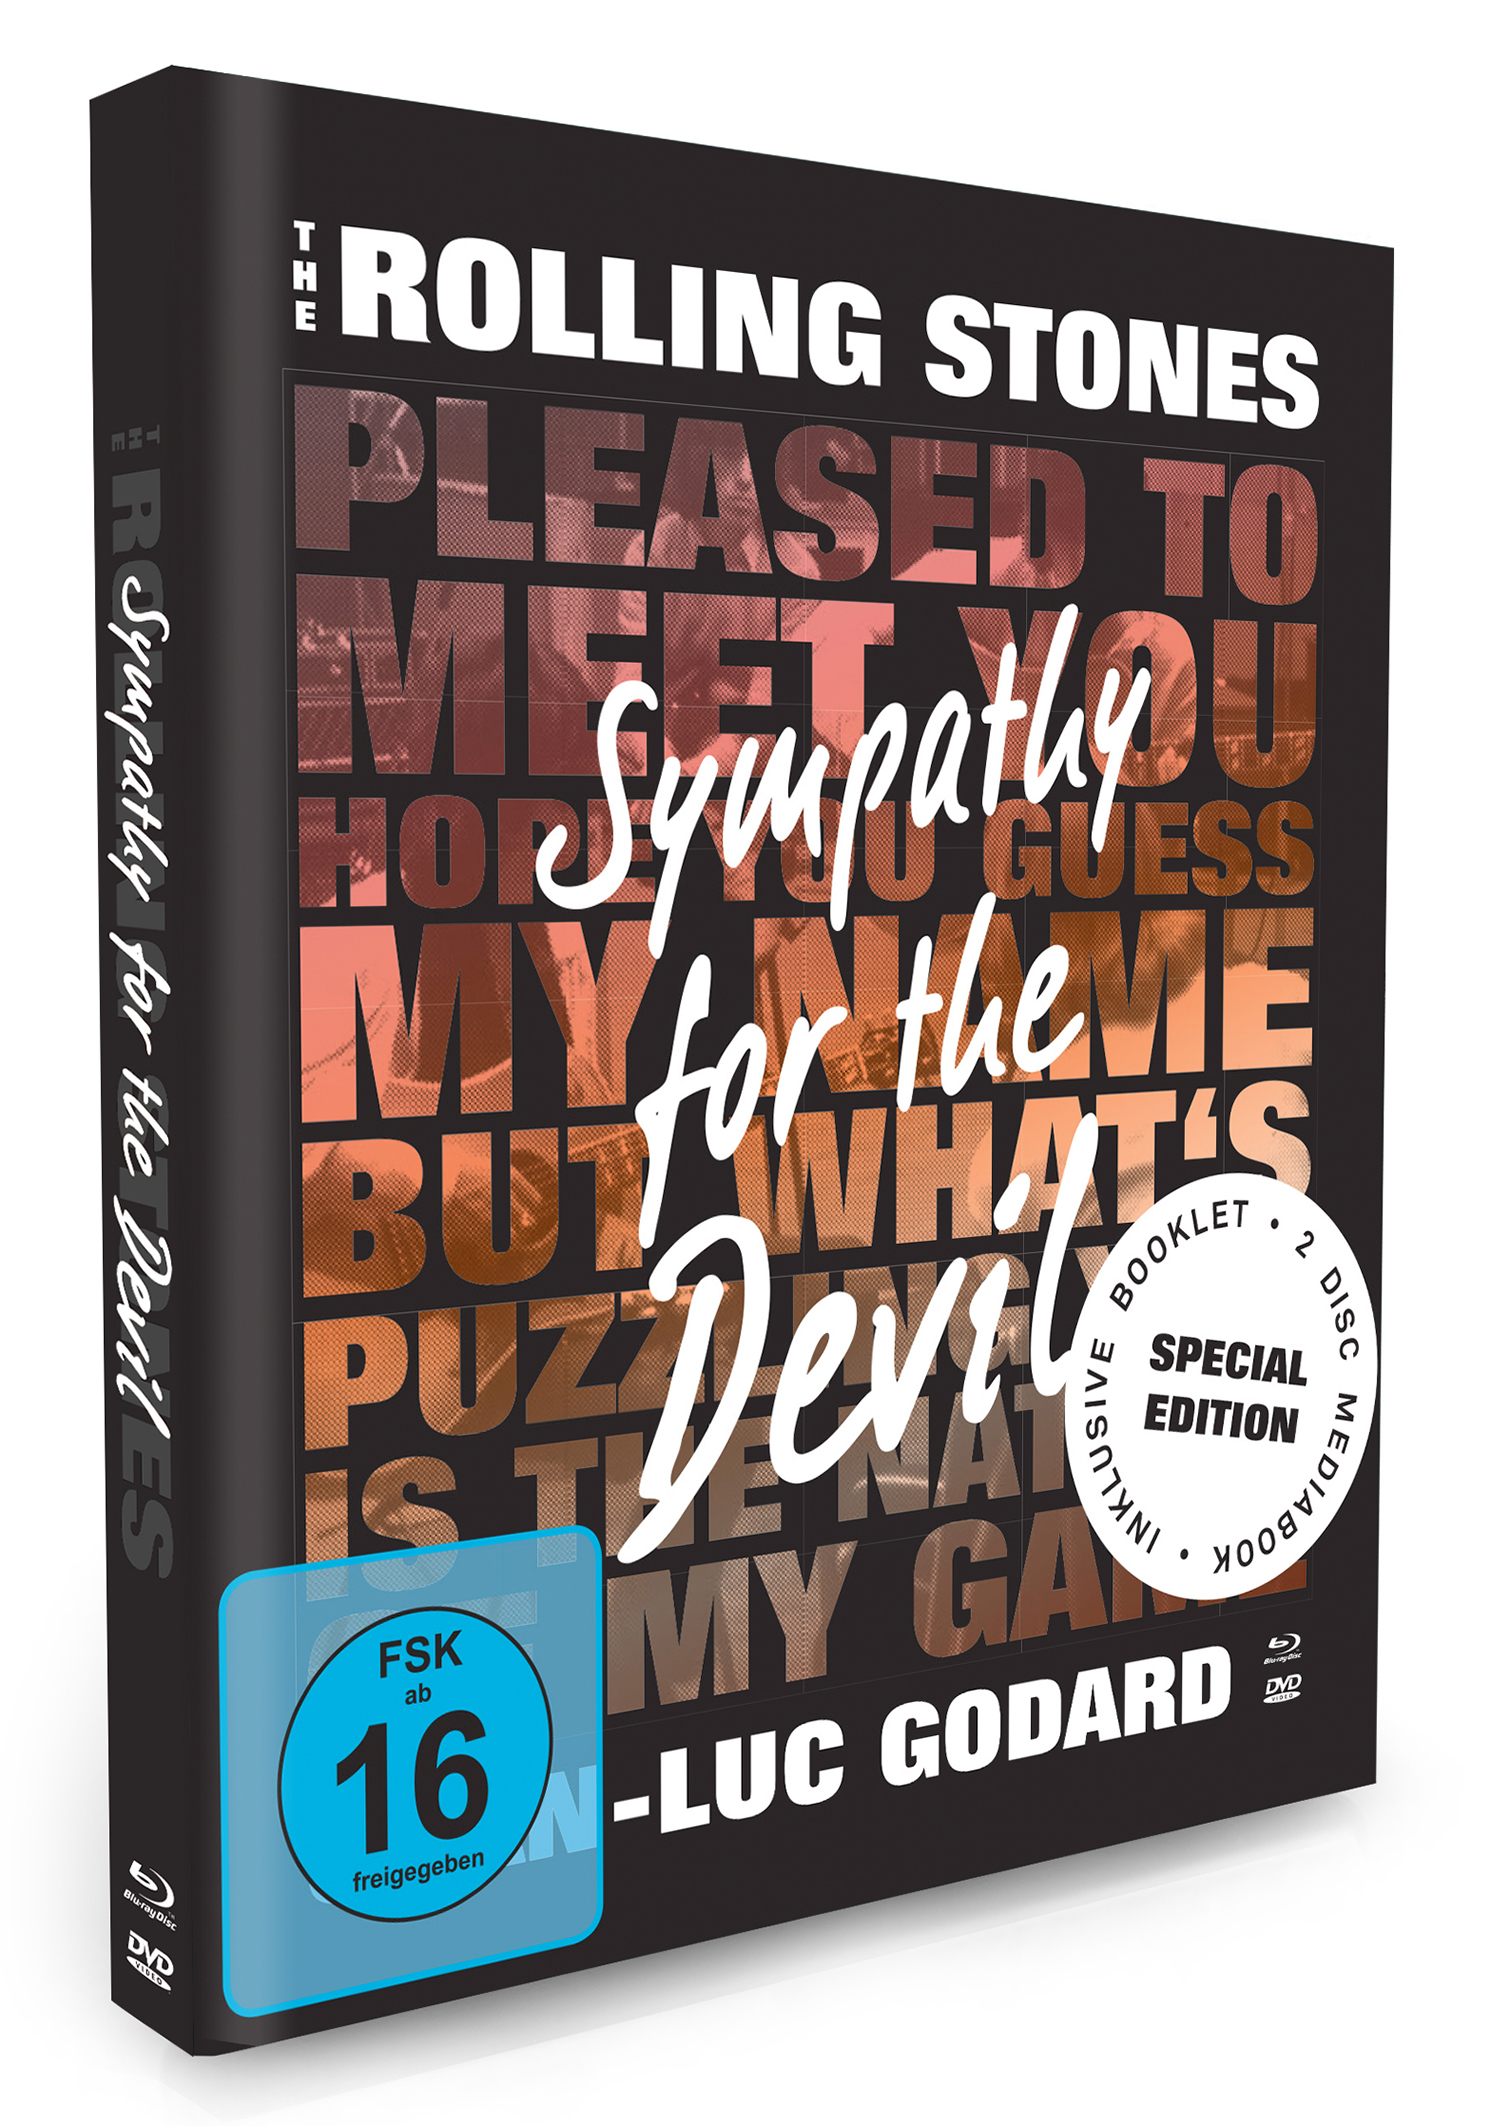 The Rolling Stones: Sympathy For Devil (Mediabook) The DVD